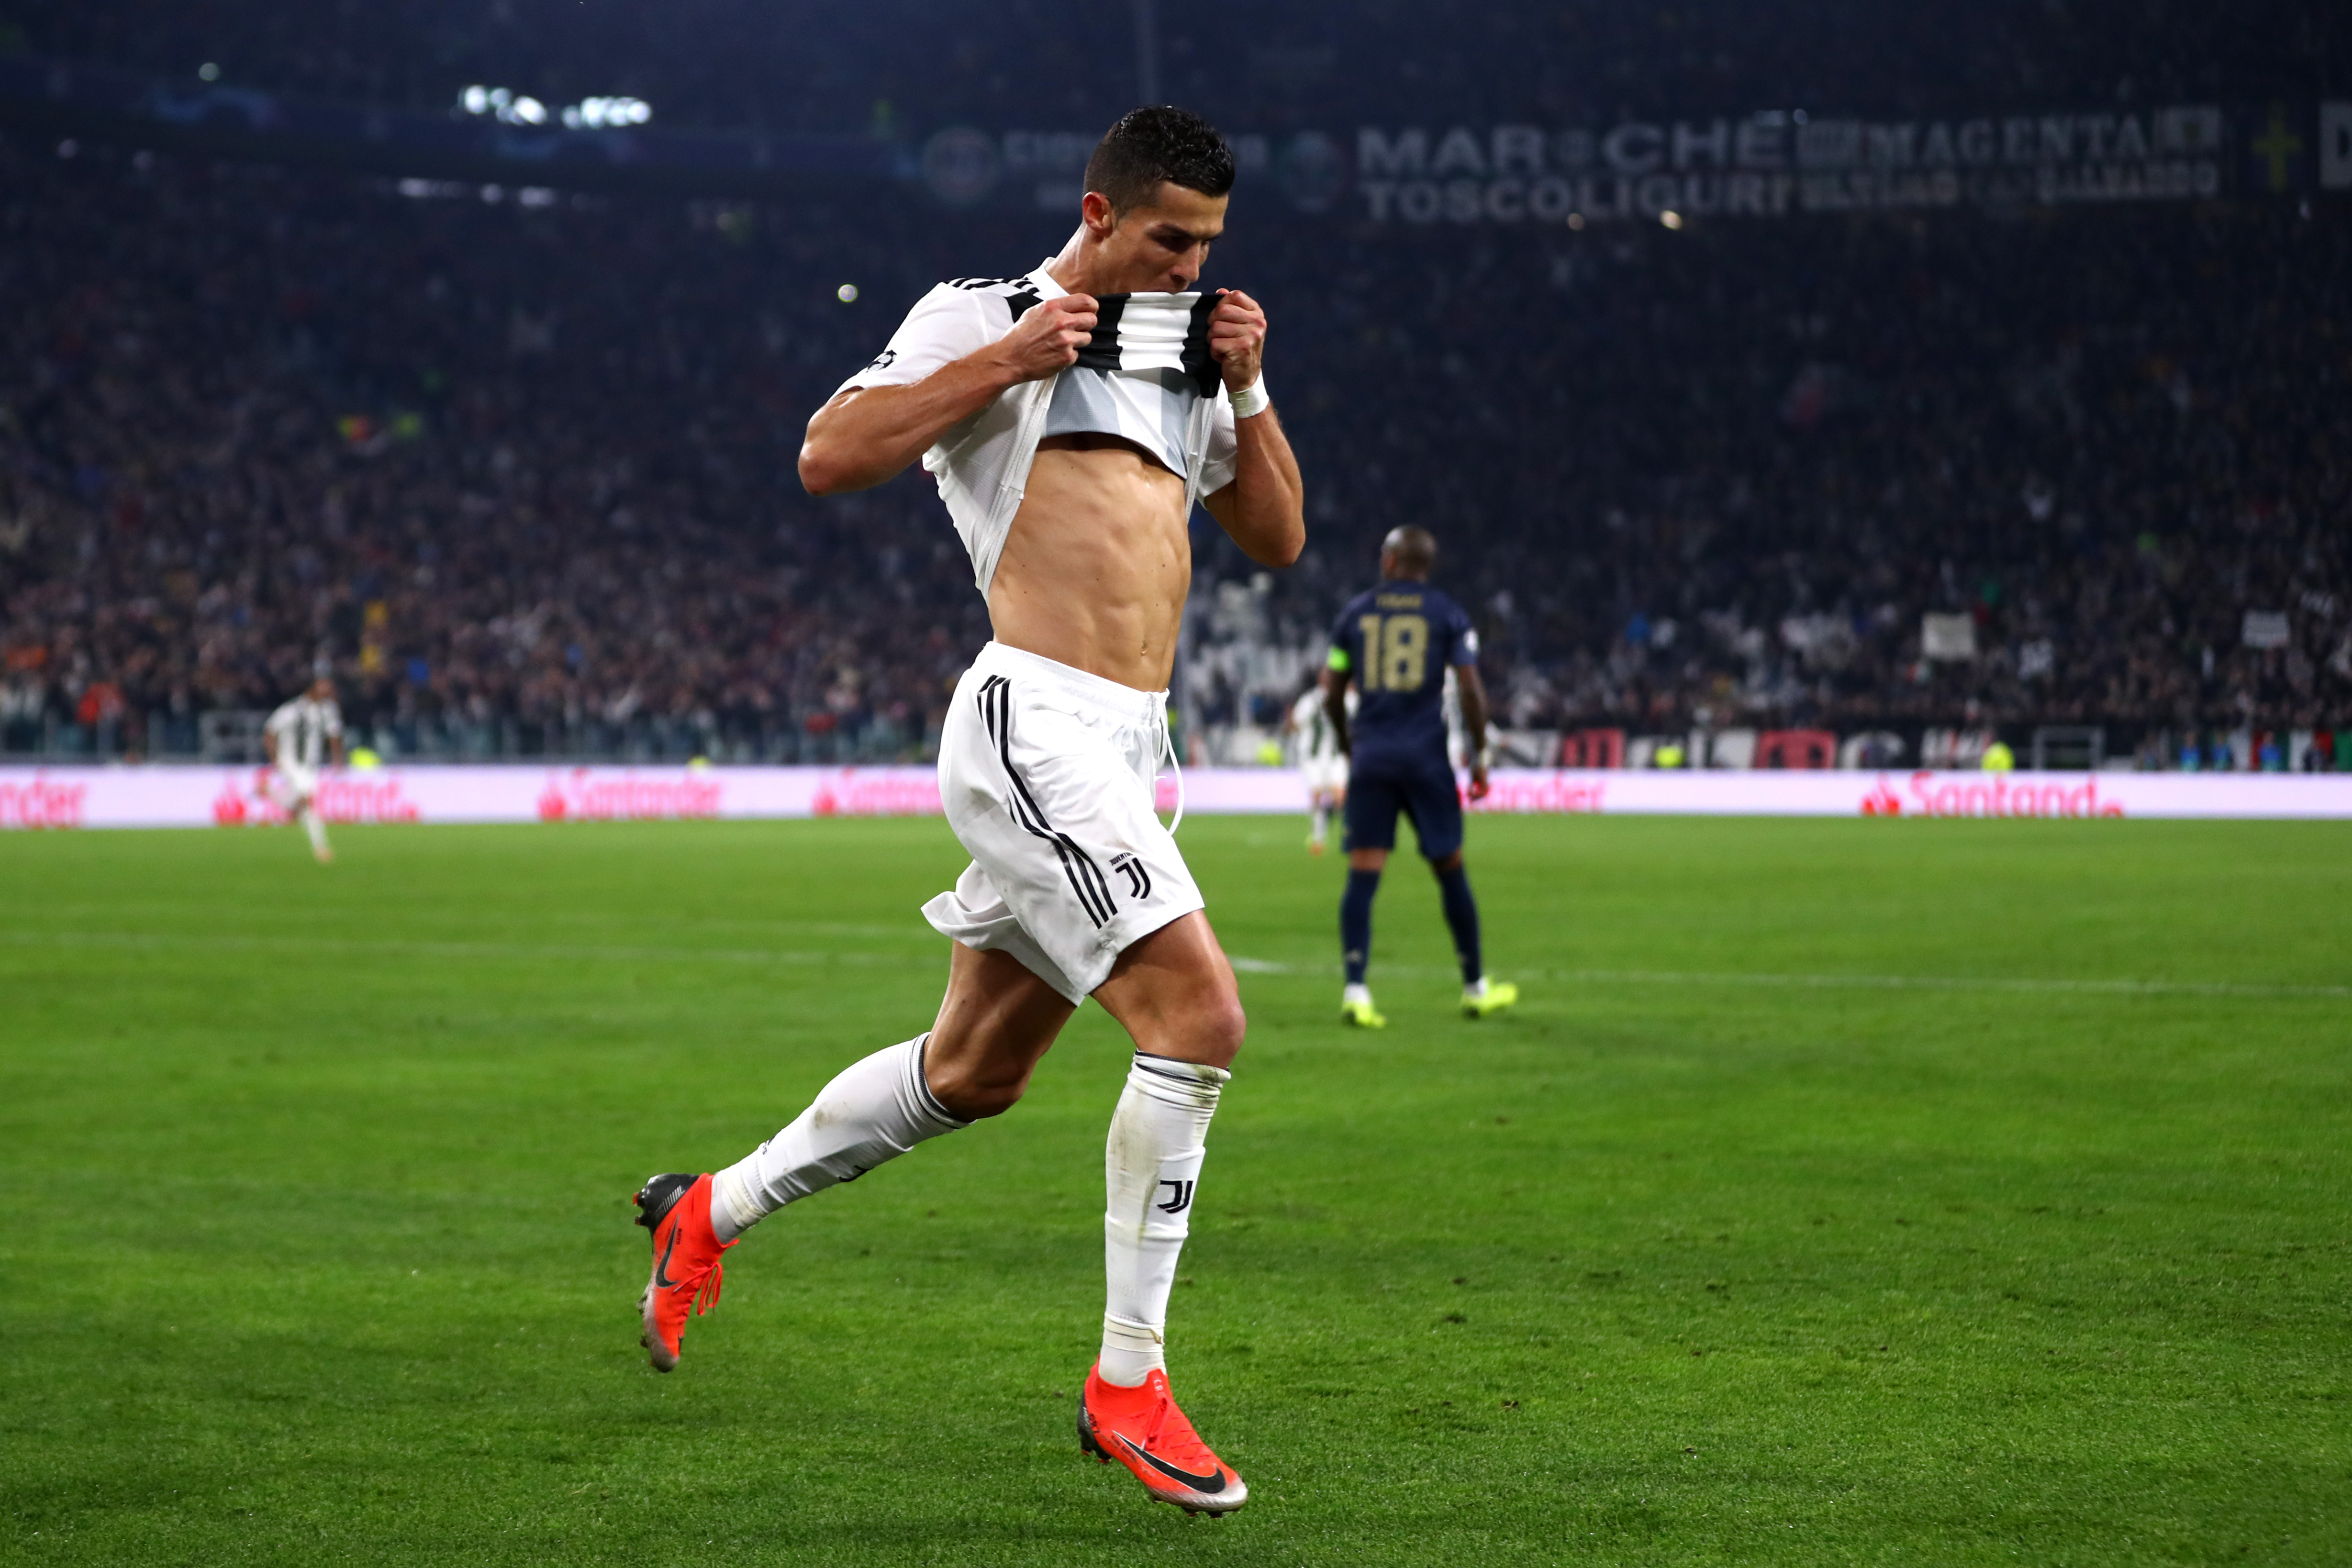 Watch: Cristiano Ronaldo Goal vs Manchester United, Celebration